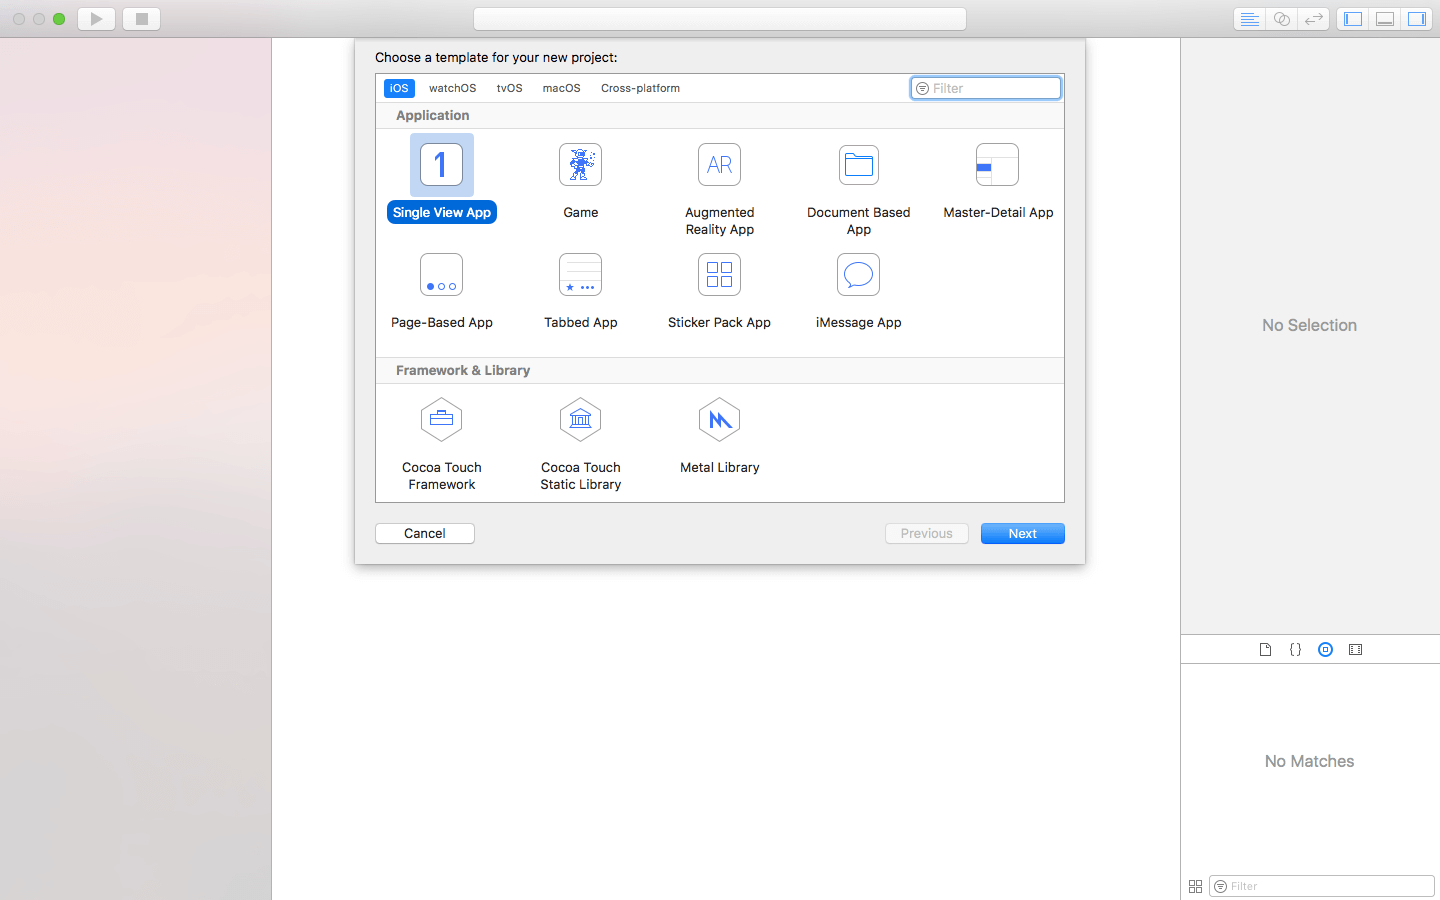 xcode9-new-proj